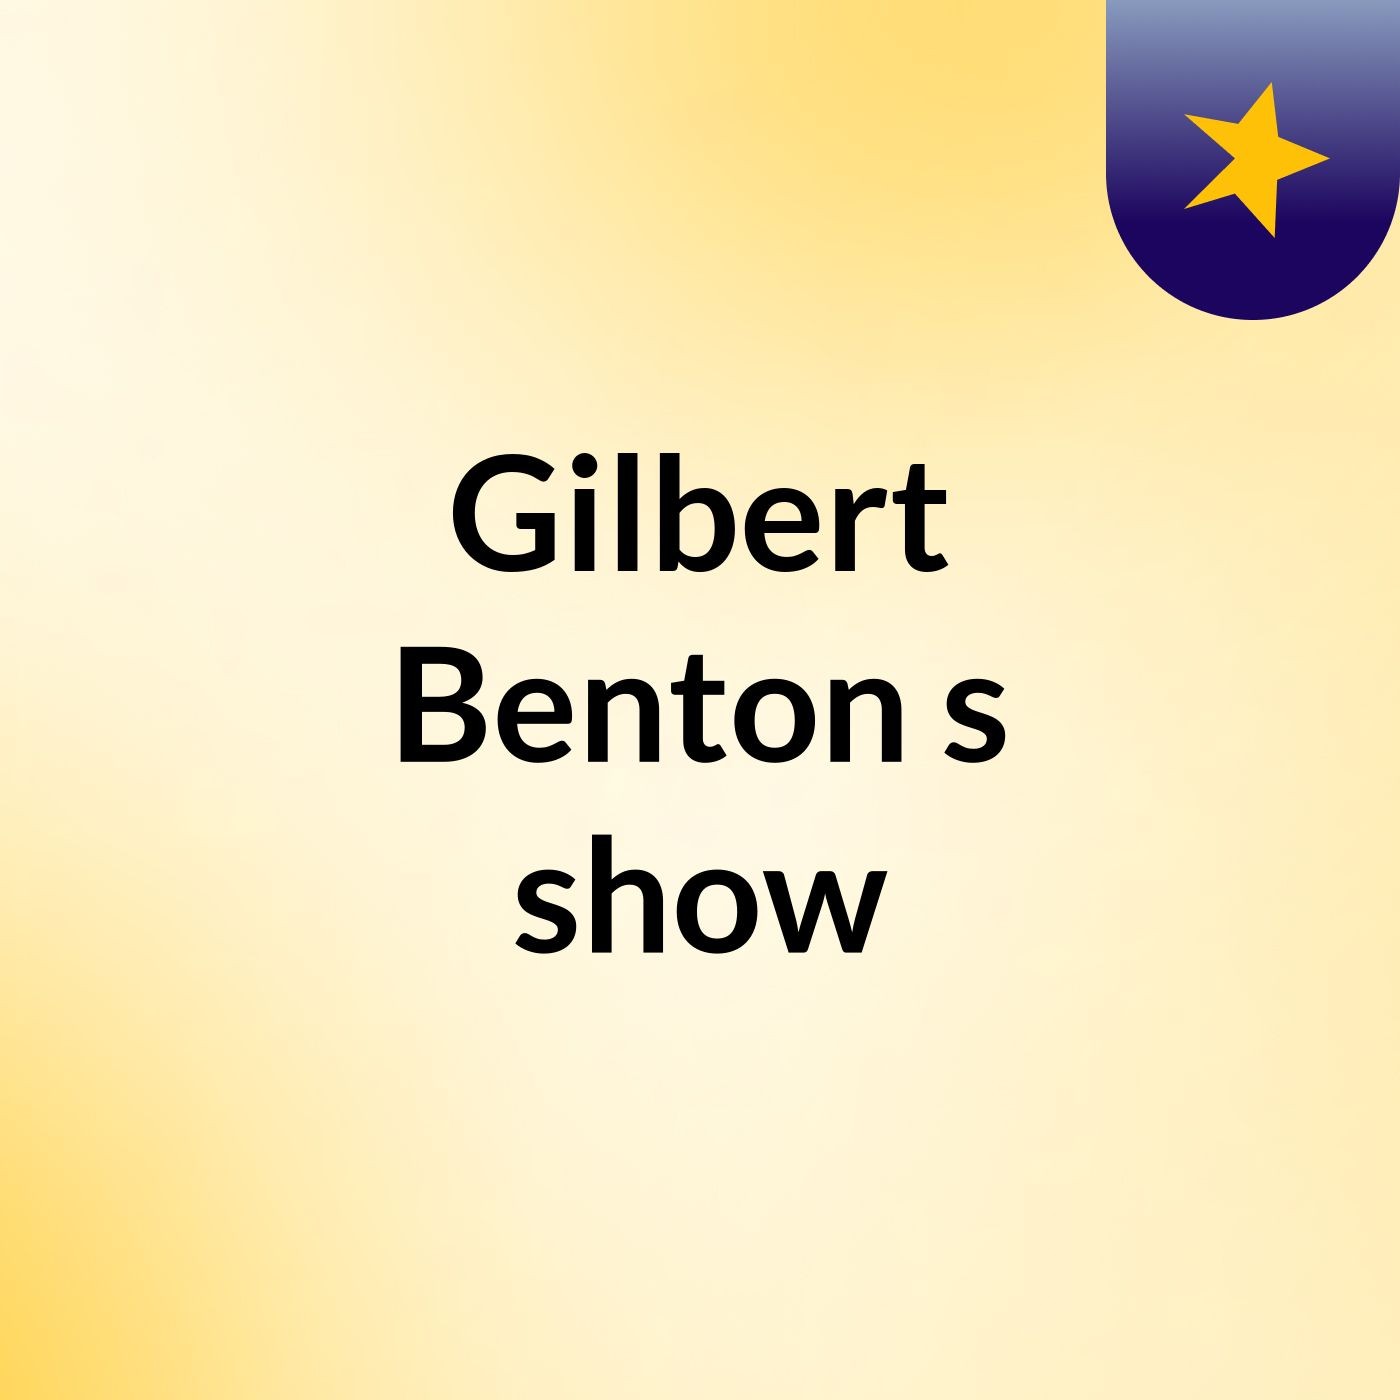 Gilbert Benton's show